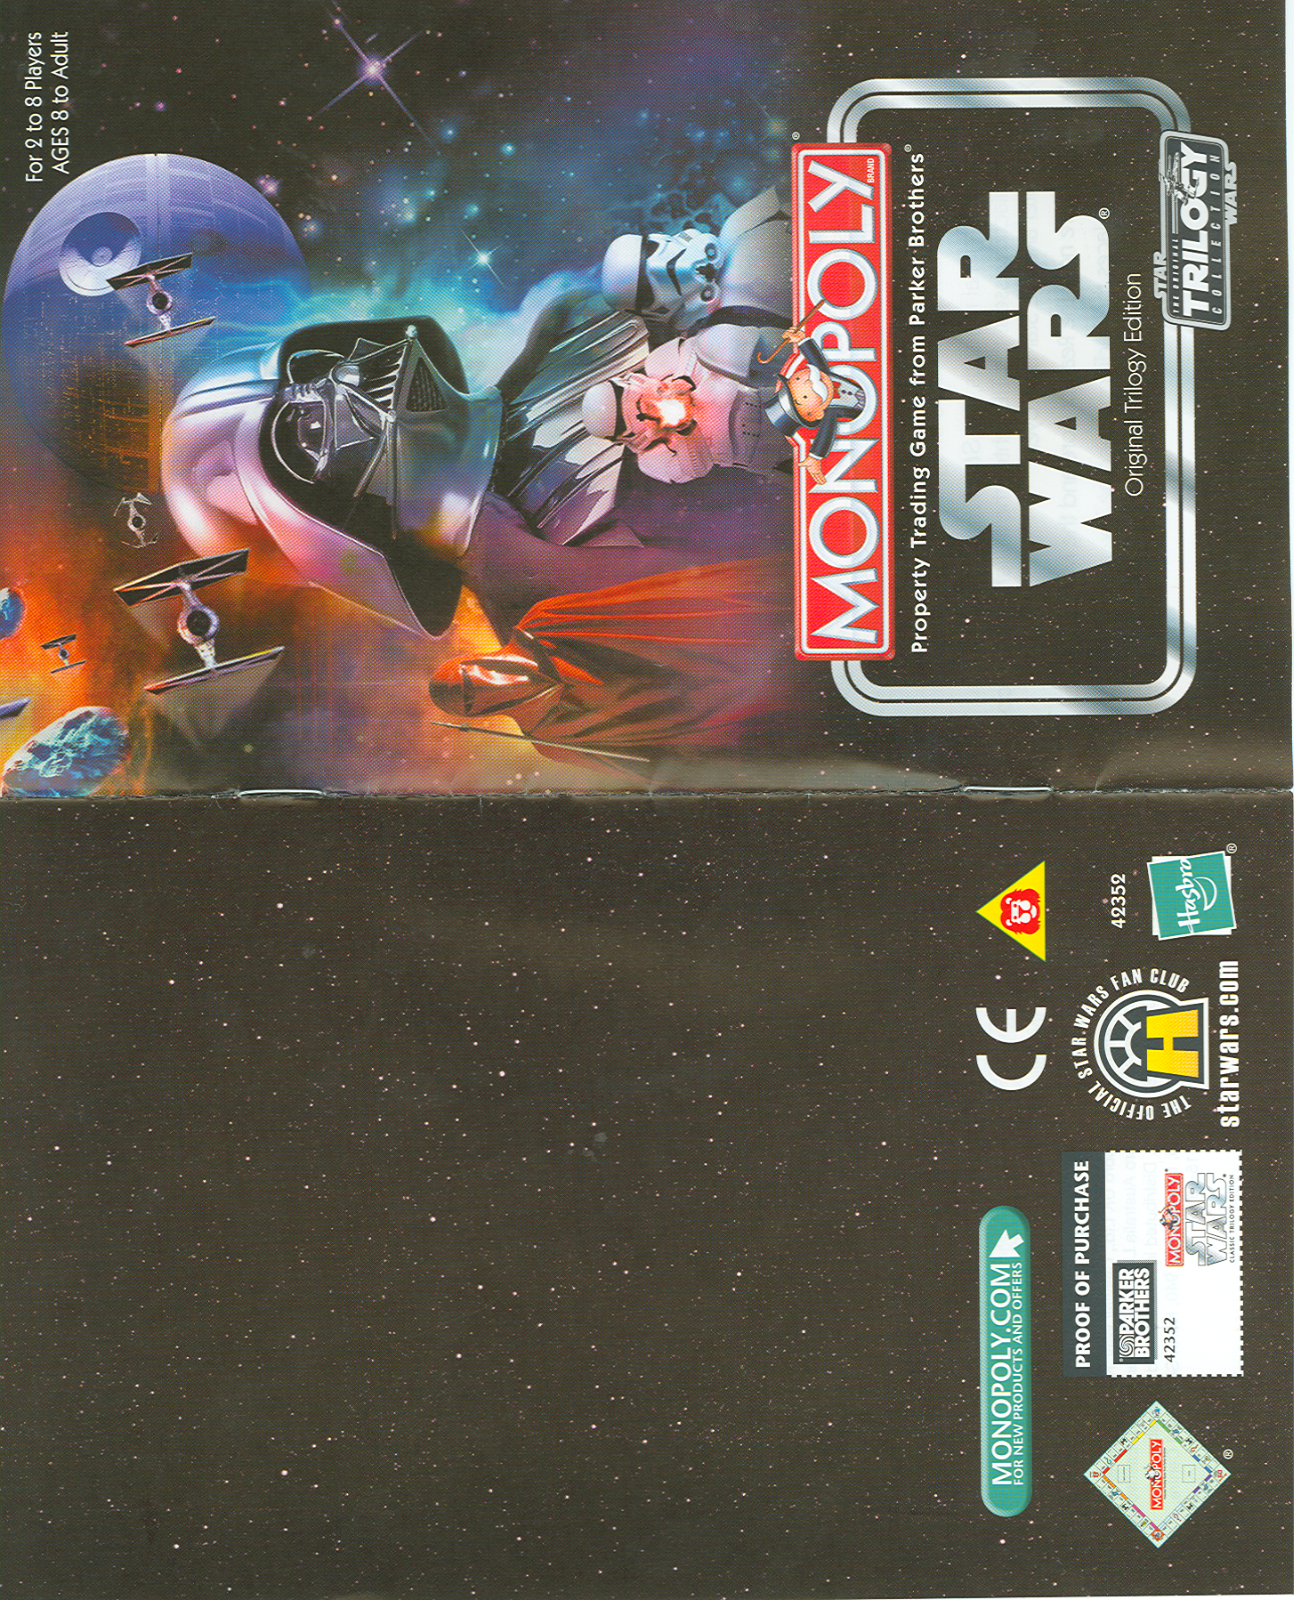 HASBRO Monopoly Star Wars Original Trilogy Edition User Manual